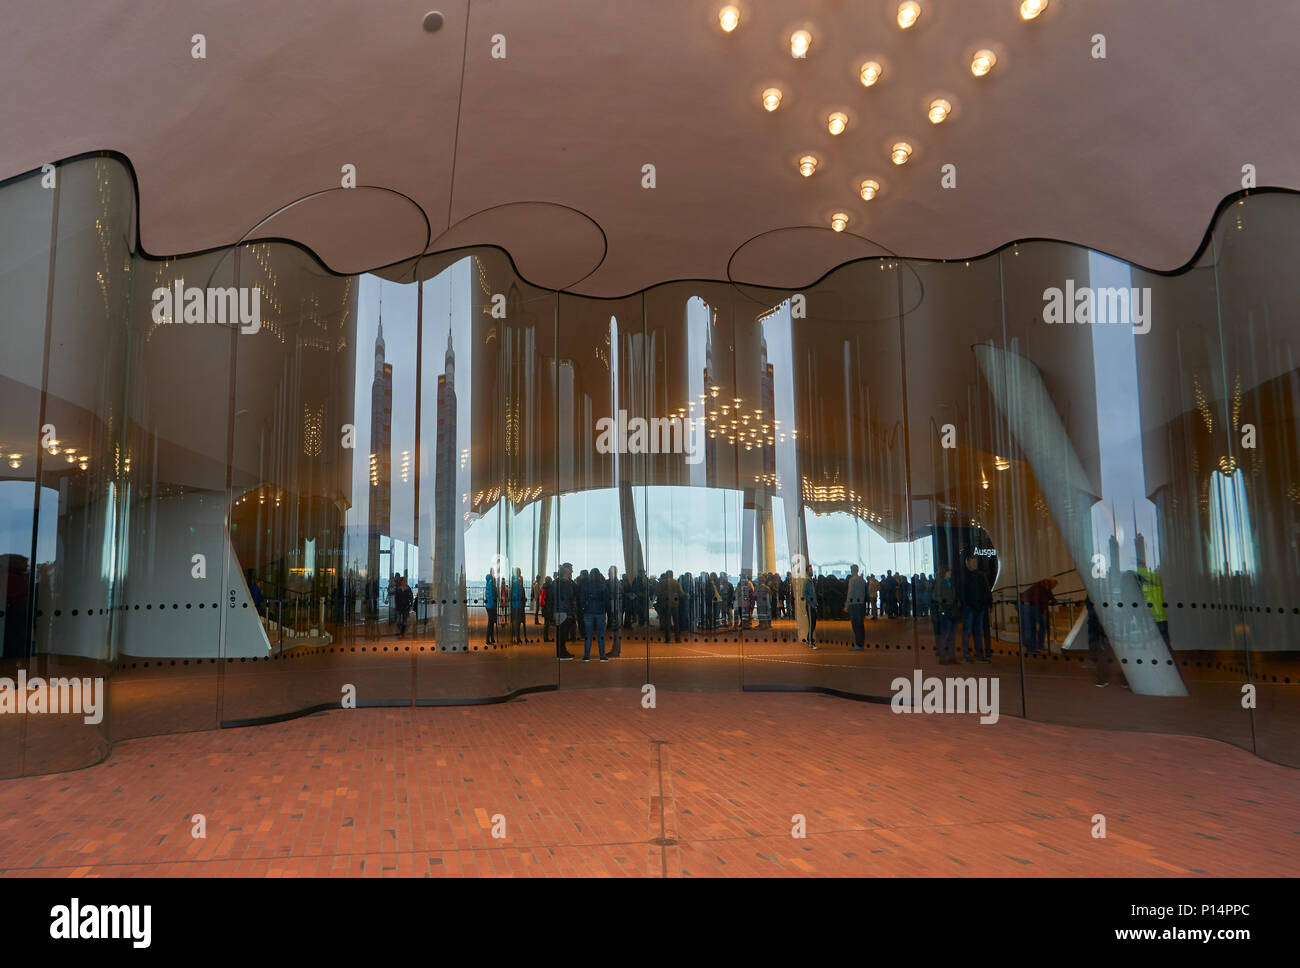 Hamburg, Germany - April 7, 2017: Visitors inside the elbphilharmonie concert hall in Hamburg Stock Photo